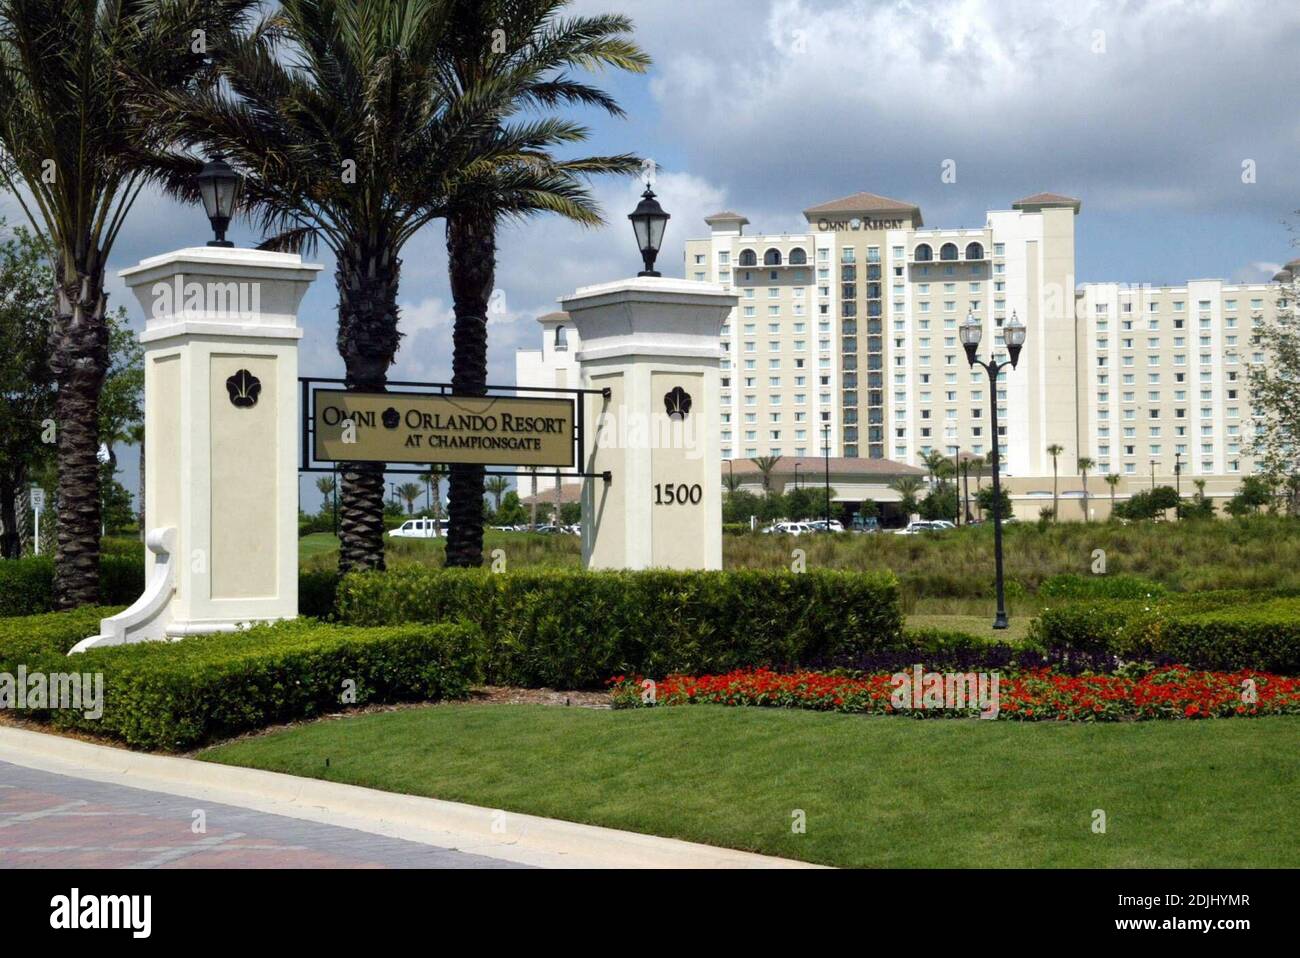 Exklusiv!! Omni Orlando Resort at ChampionsGates 1500 Masters Blvd. ChampionGates, FL 33896. 05/27/06 Stockfoto